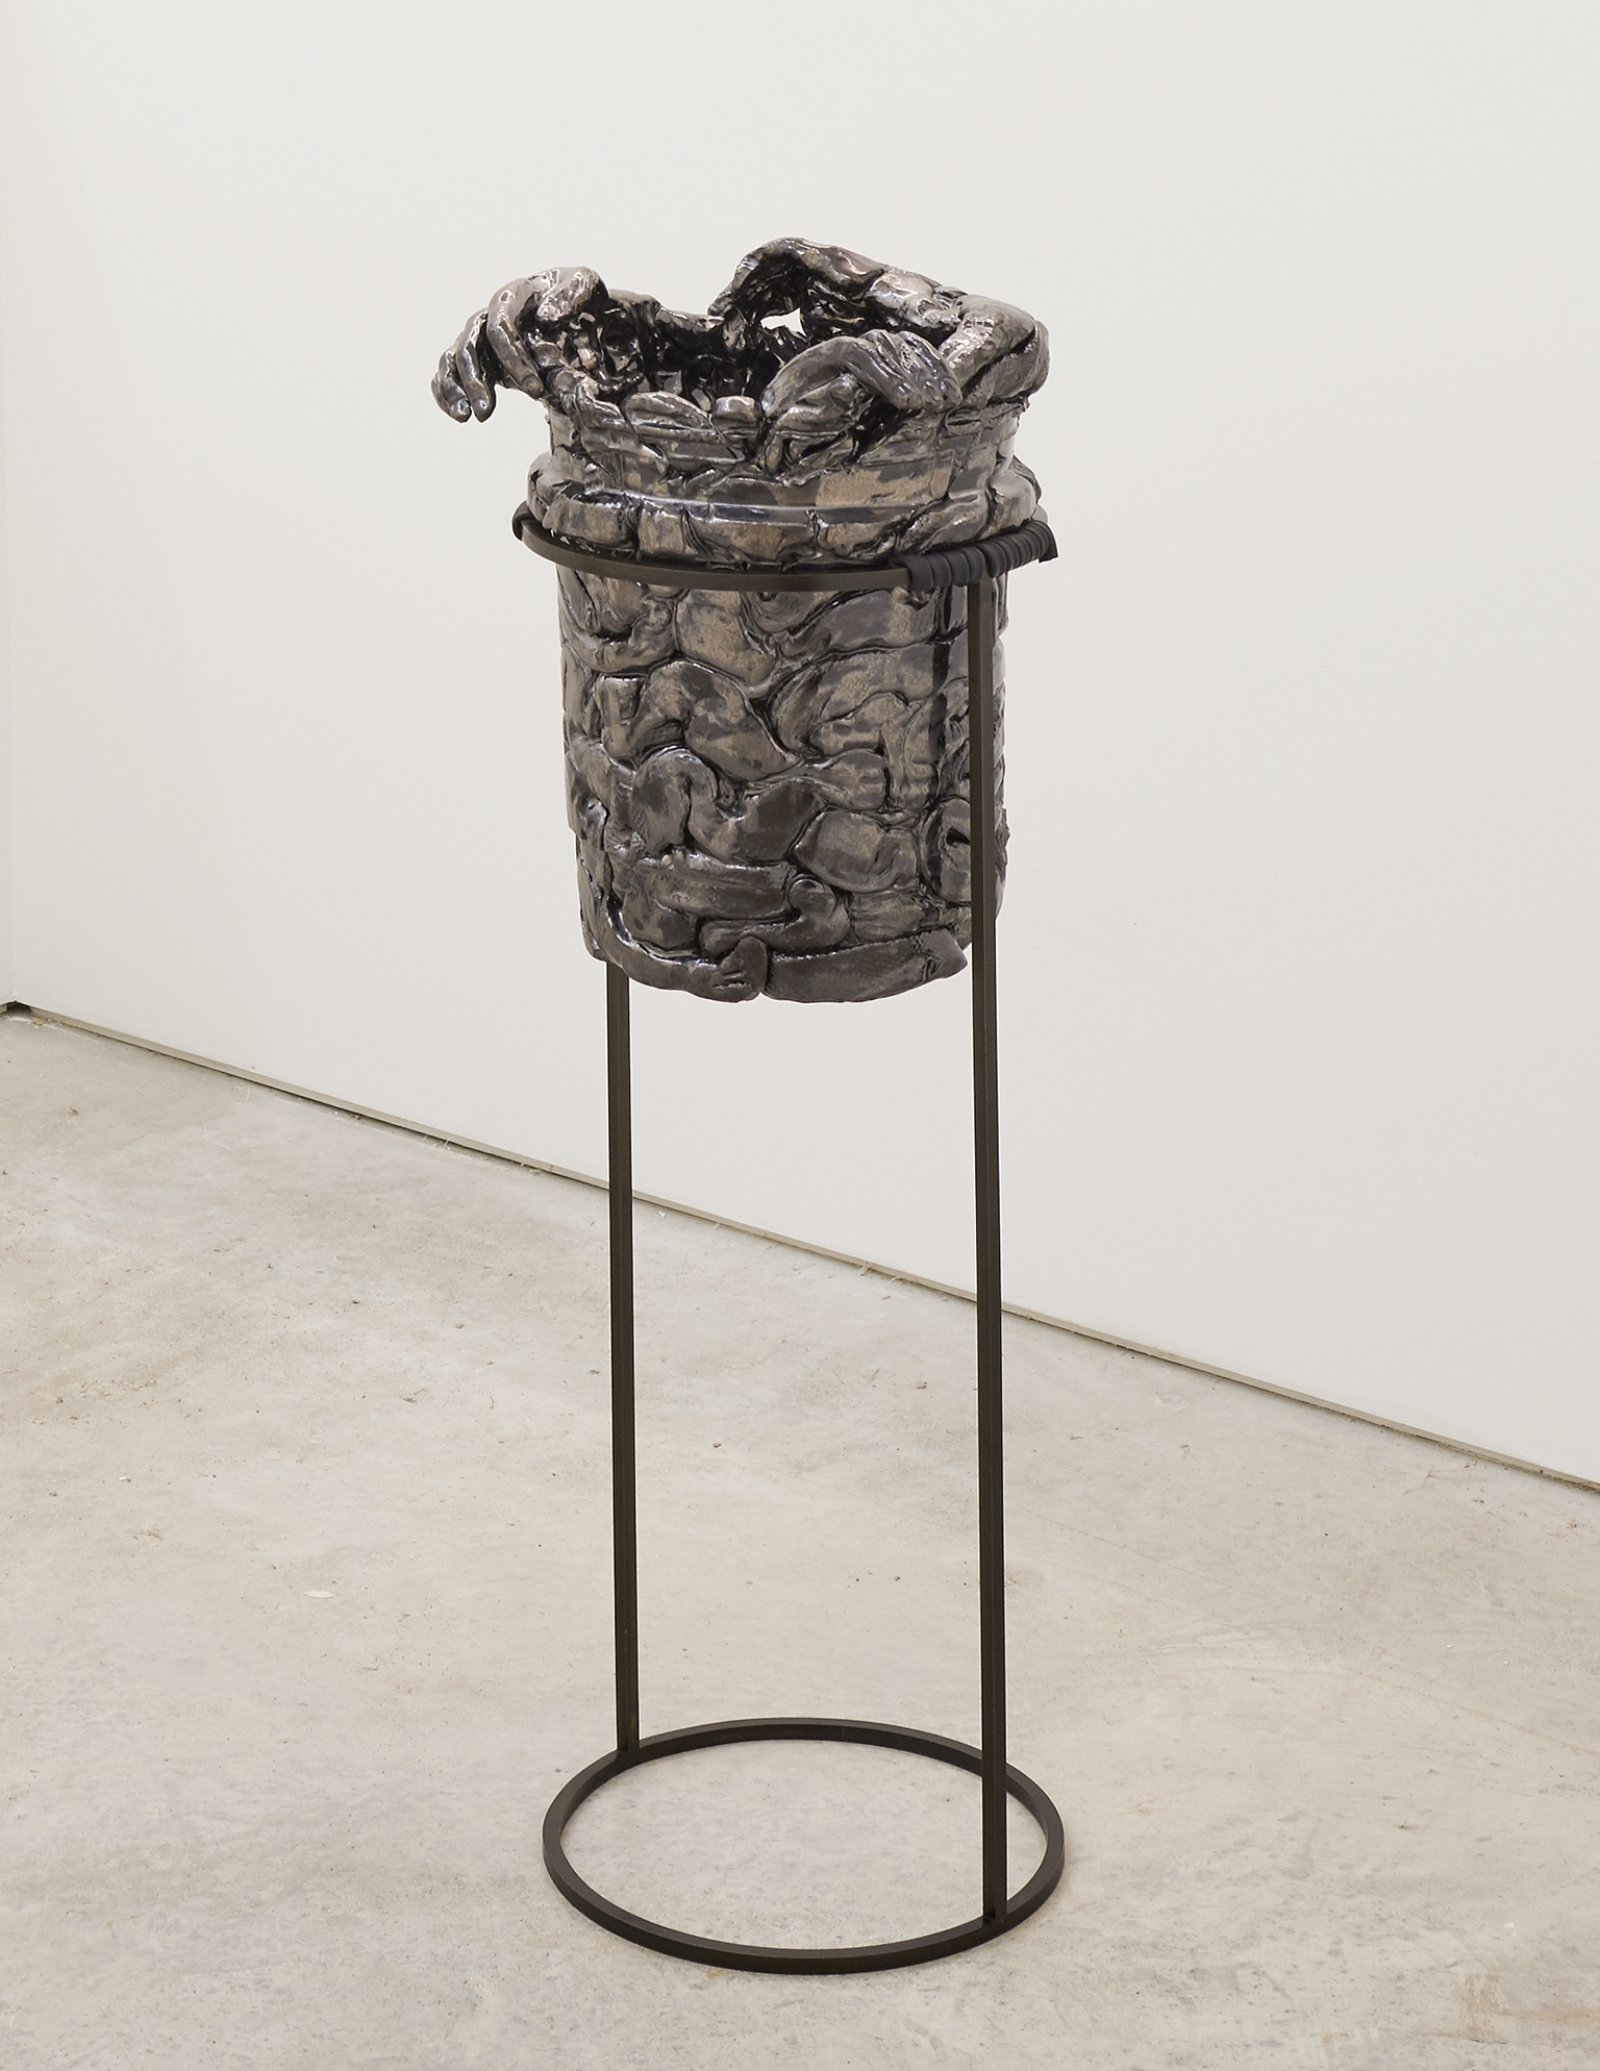 Rochelle Goldberg, Thirsty Bucket, 2016, ceramic, crude oil, steel, latex, 31 x 12 x 12 in. (79 x 31 x 31 cm). Installation view, The Plastic Thirsty, SculptureCenter, Long Island City, USA, 2016